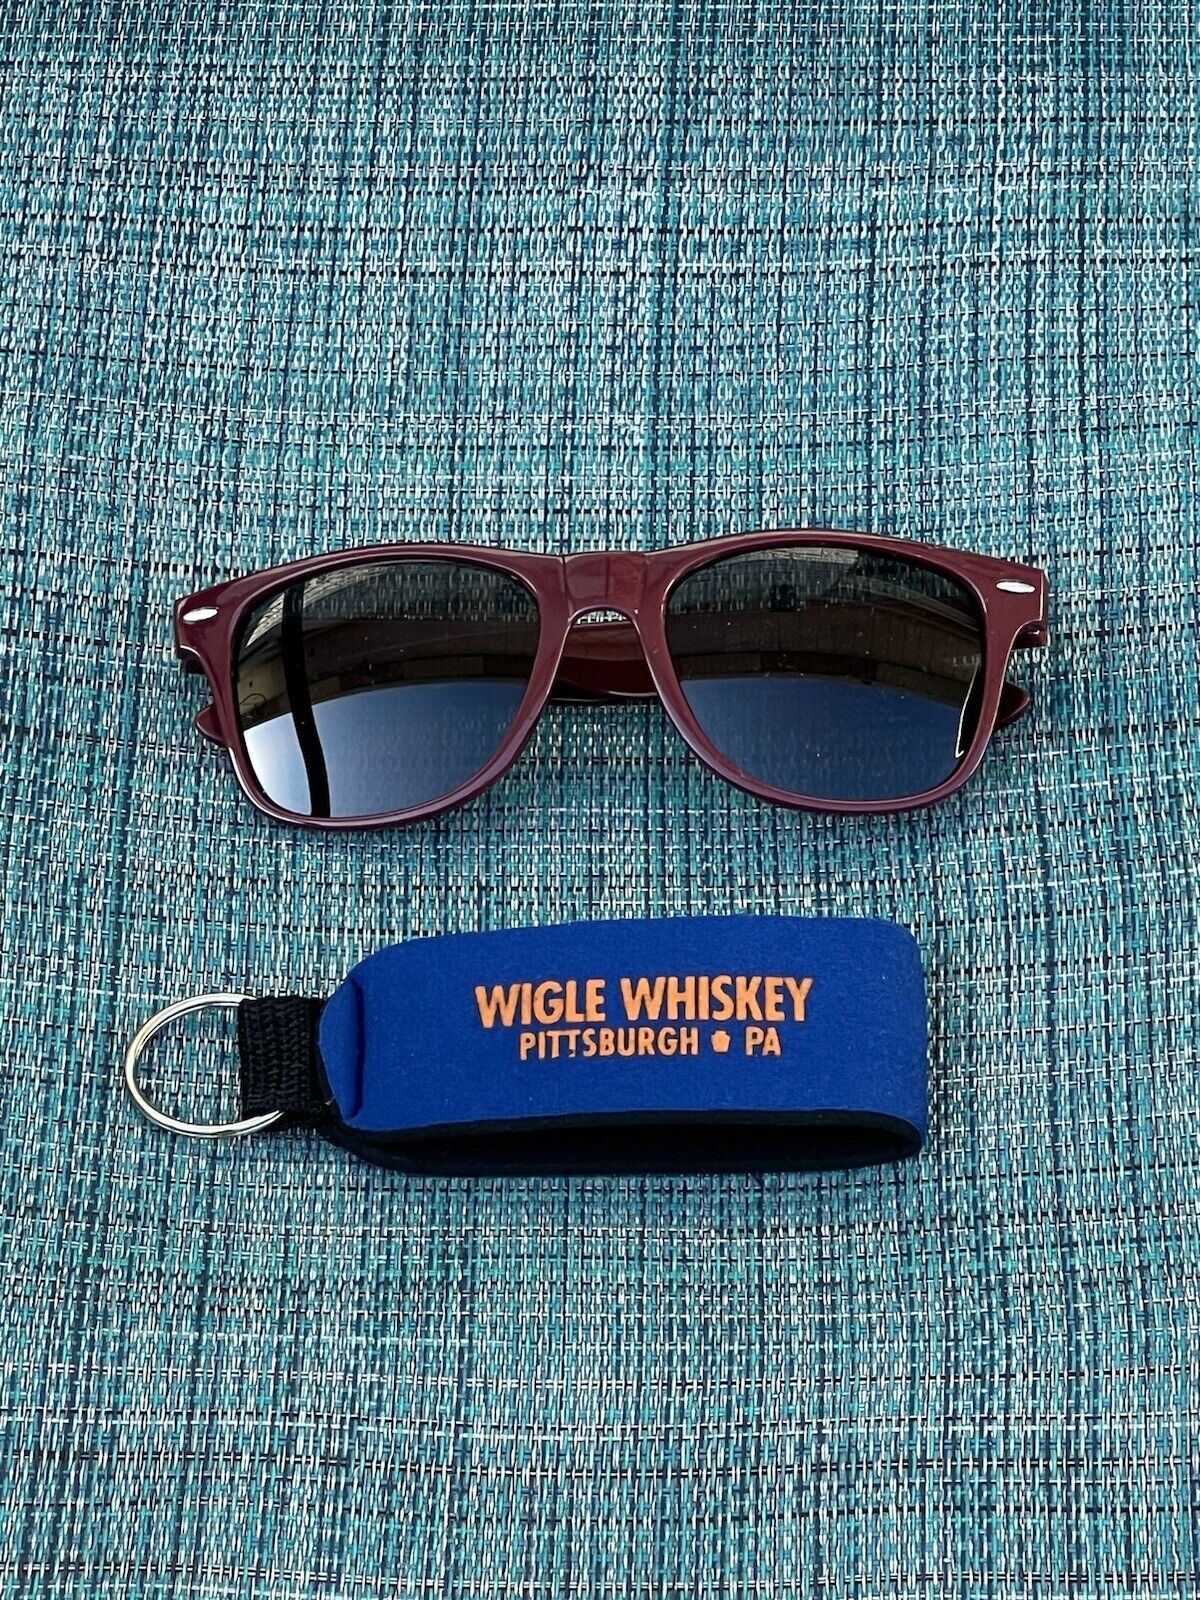 Wigle Whiskey Novelty Sunglasses & Keychain New Swag Pittsburgh Pa.